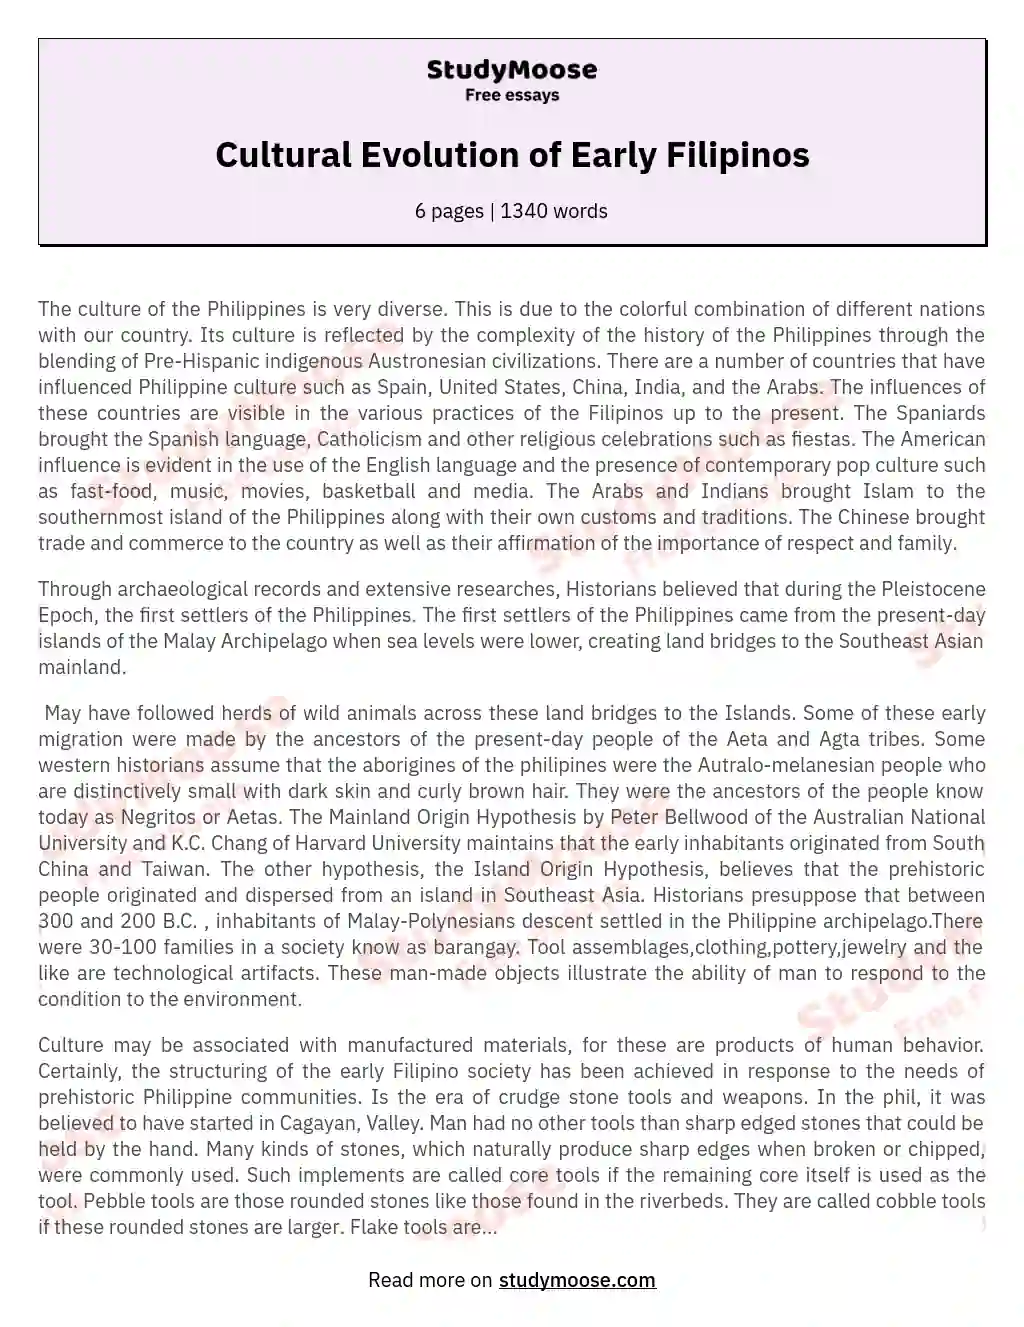 Cultural Evolution of Early Filipinos essay